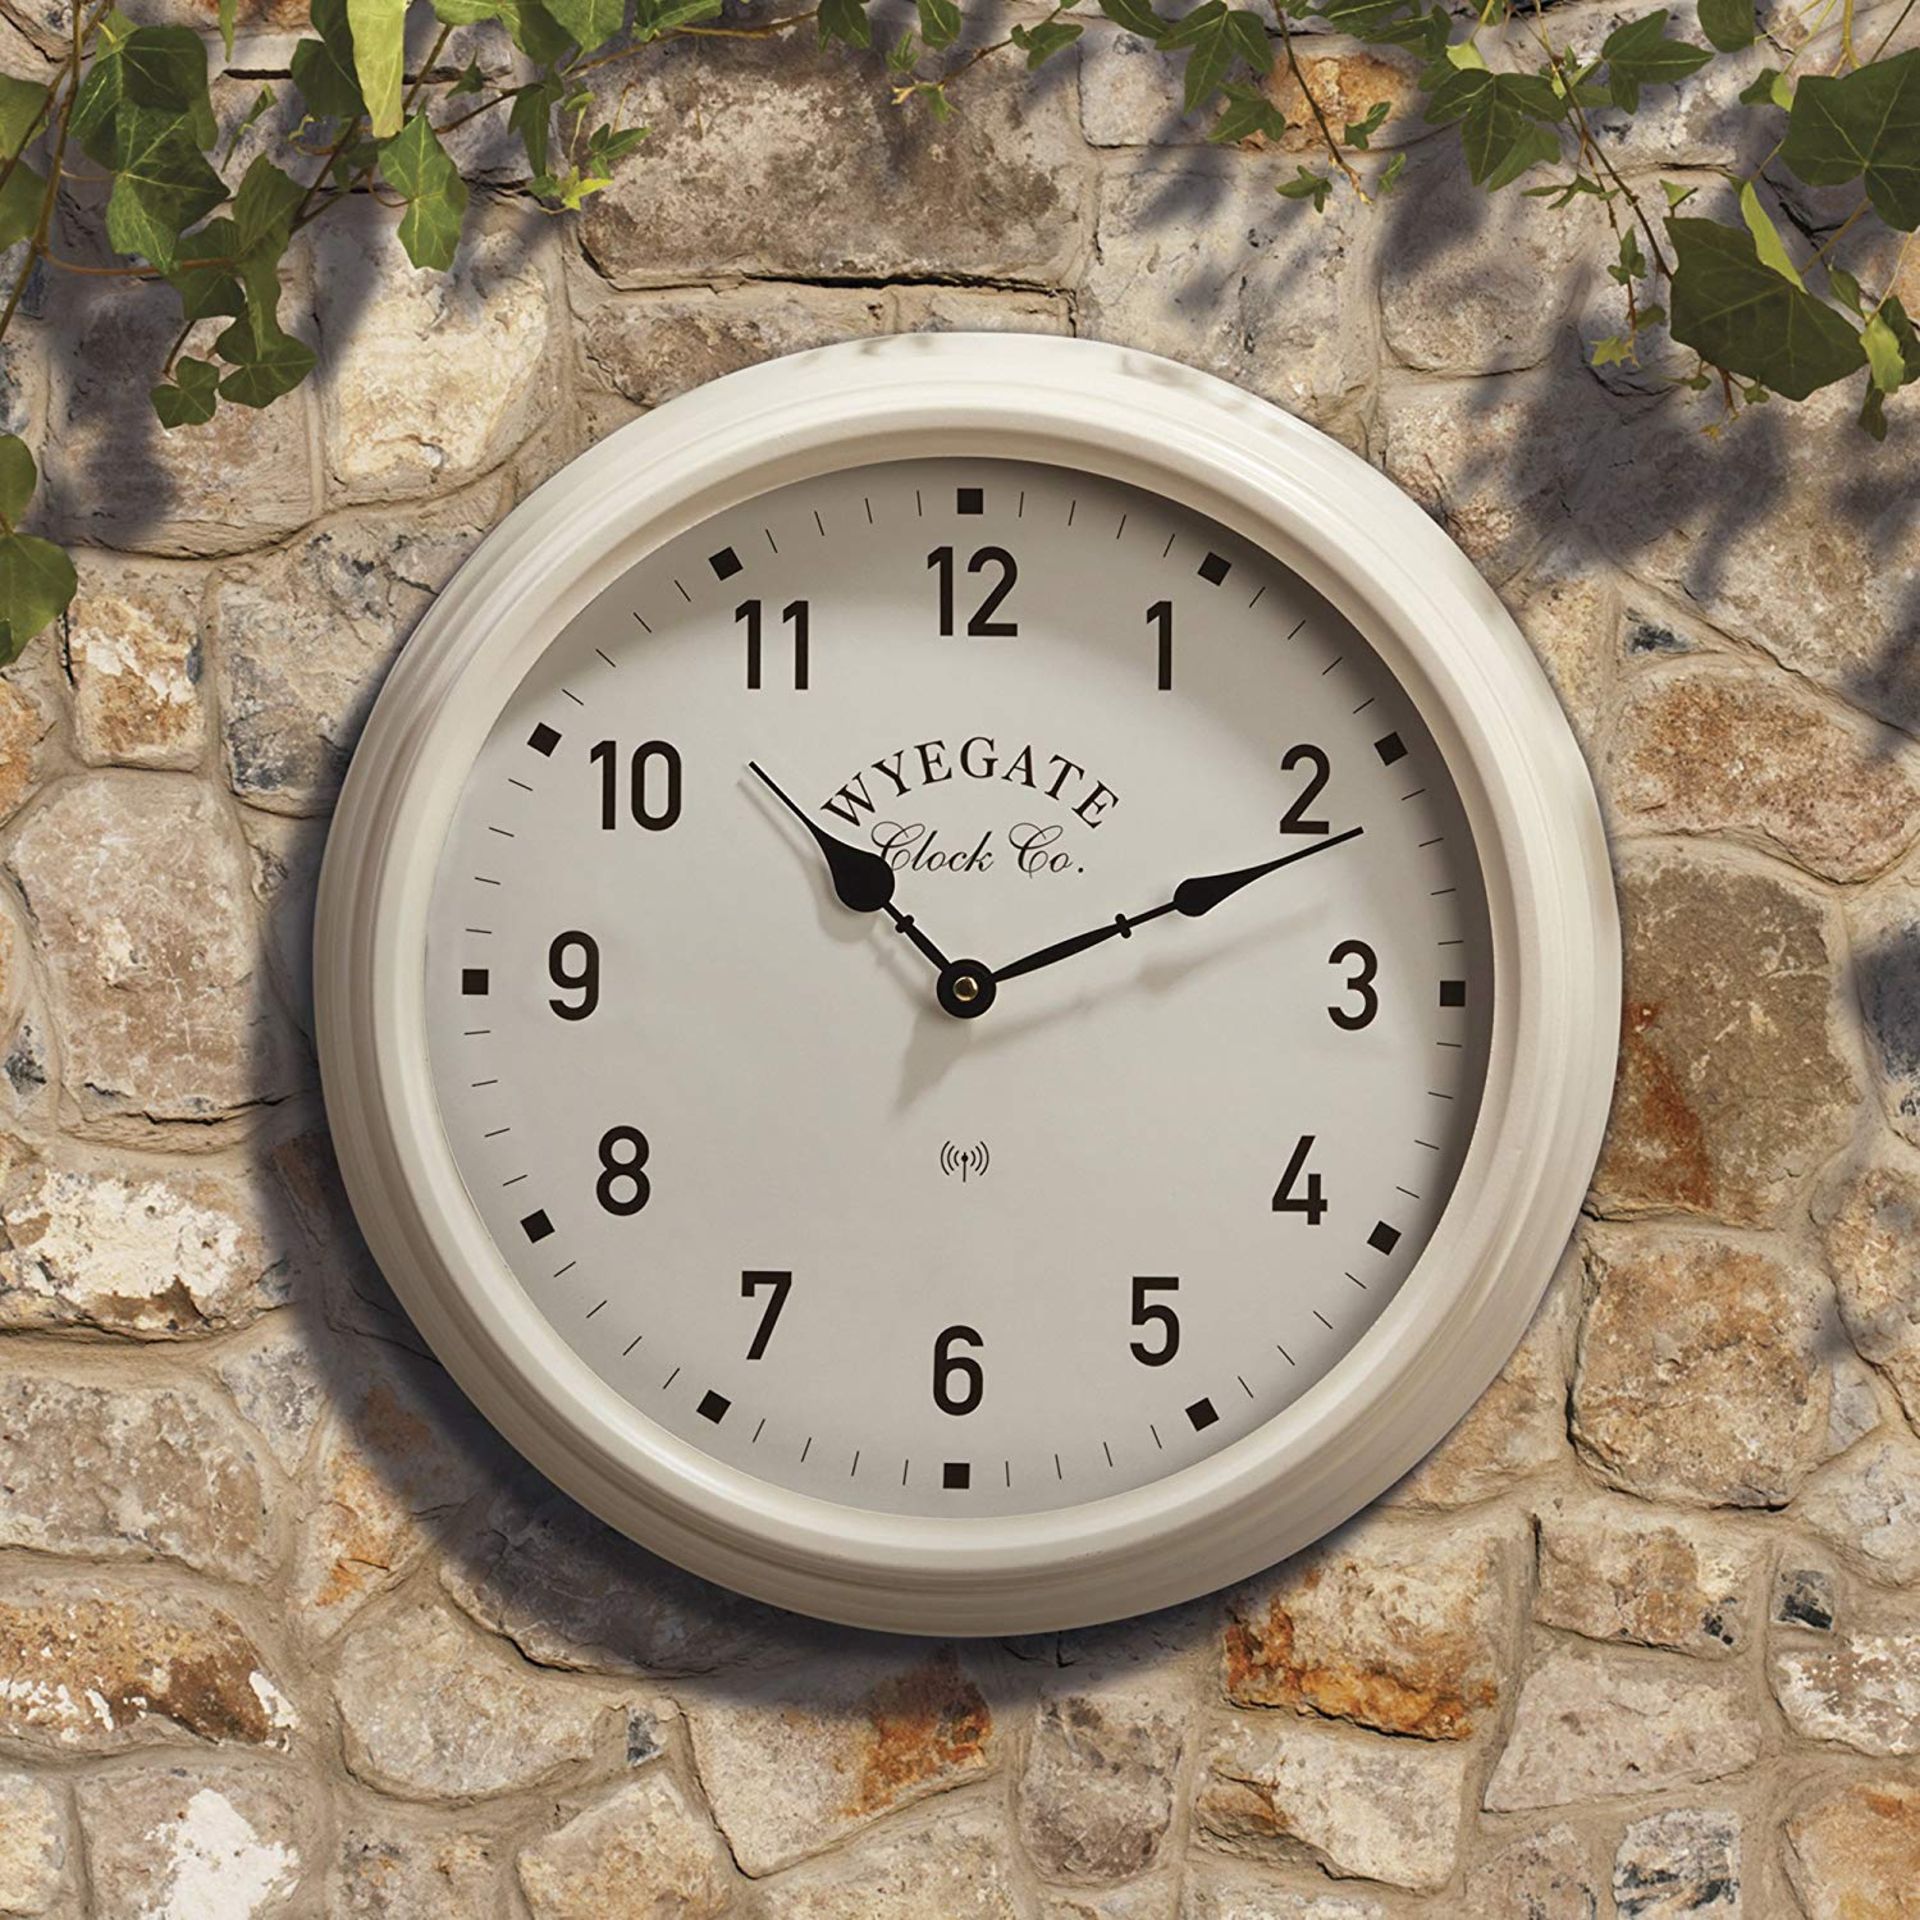 V Brand New Big Wyegate Garden/Indoor Clock (Radio Controlled) - 39cm - Cream - RRP £24.99 -